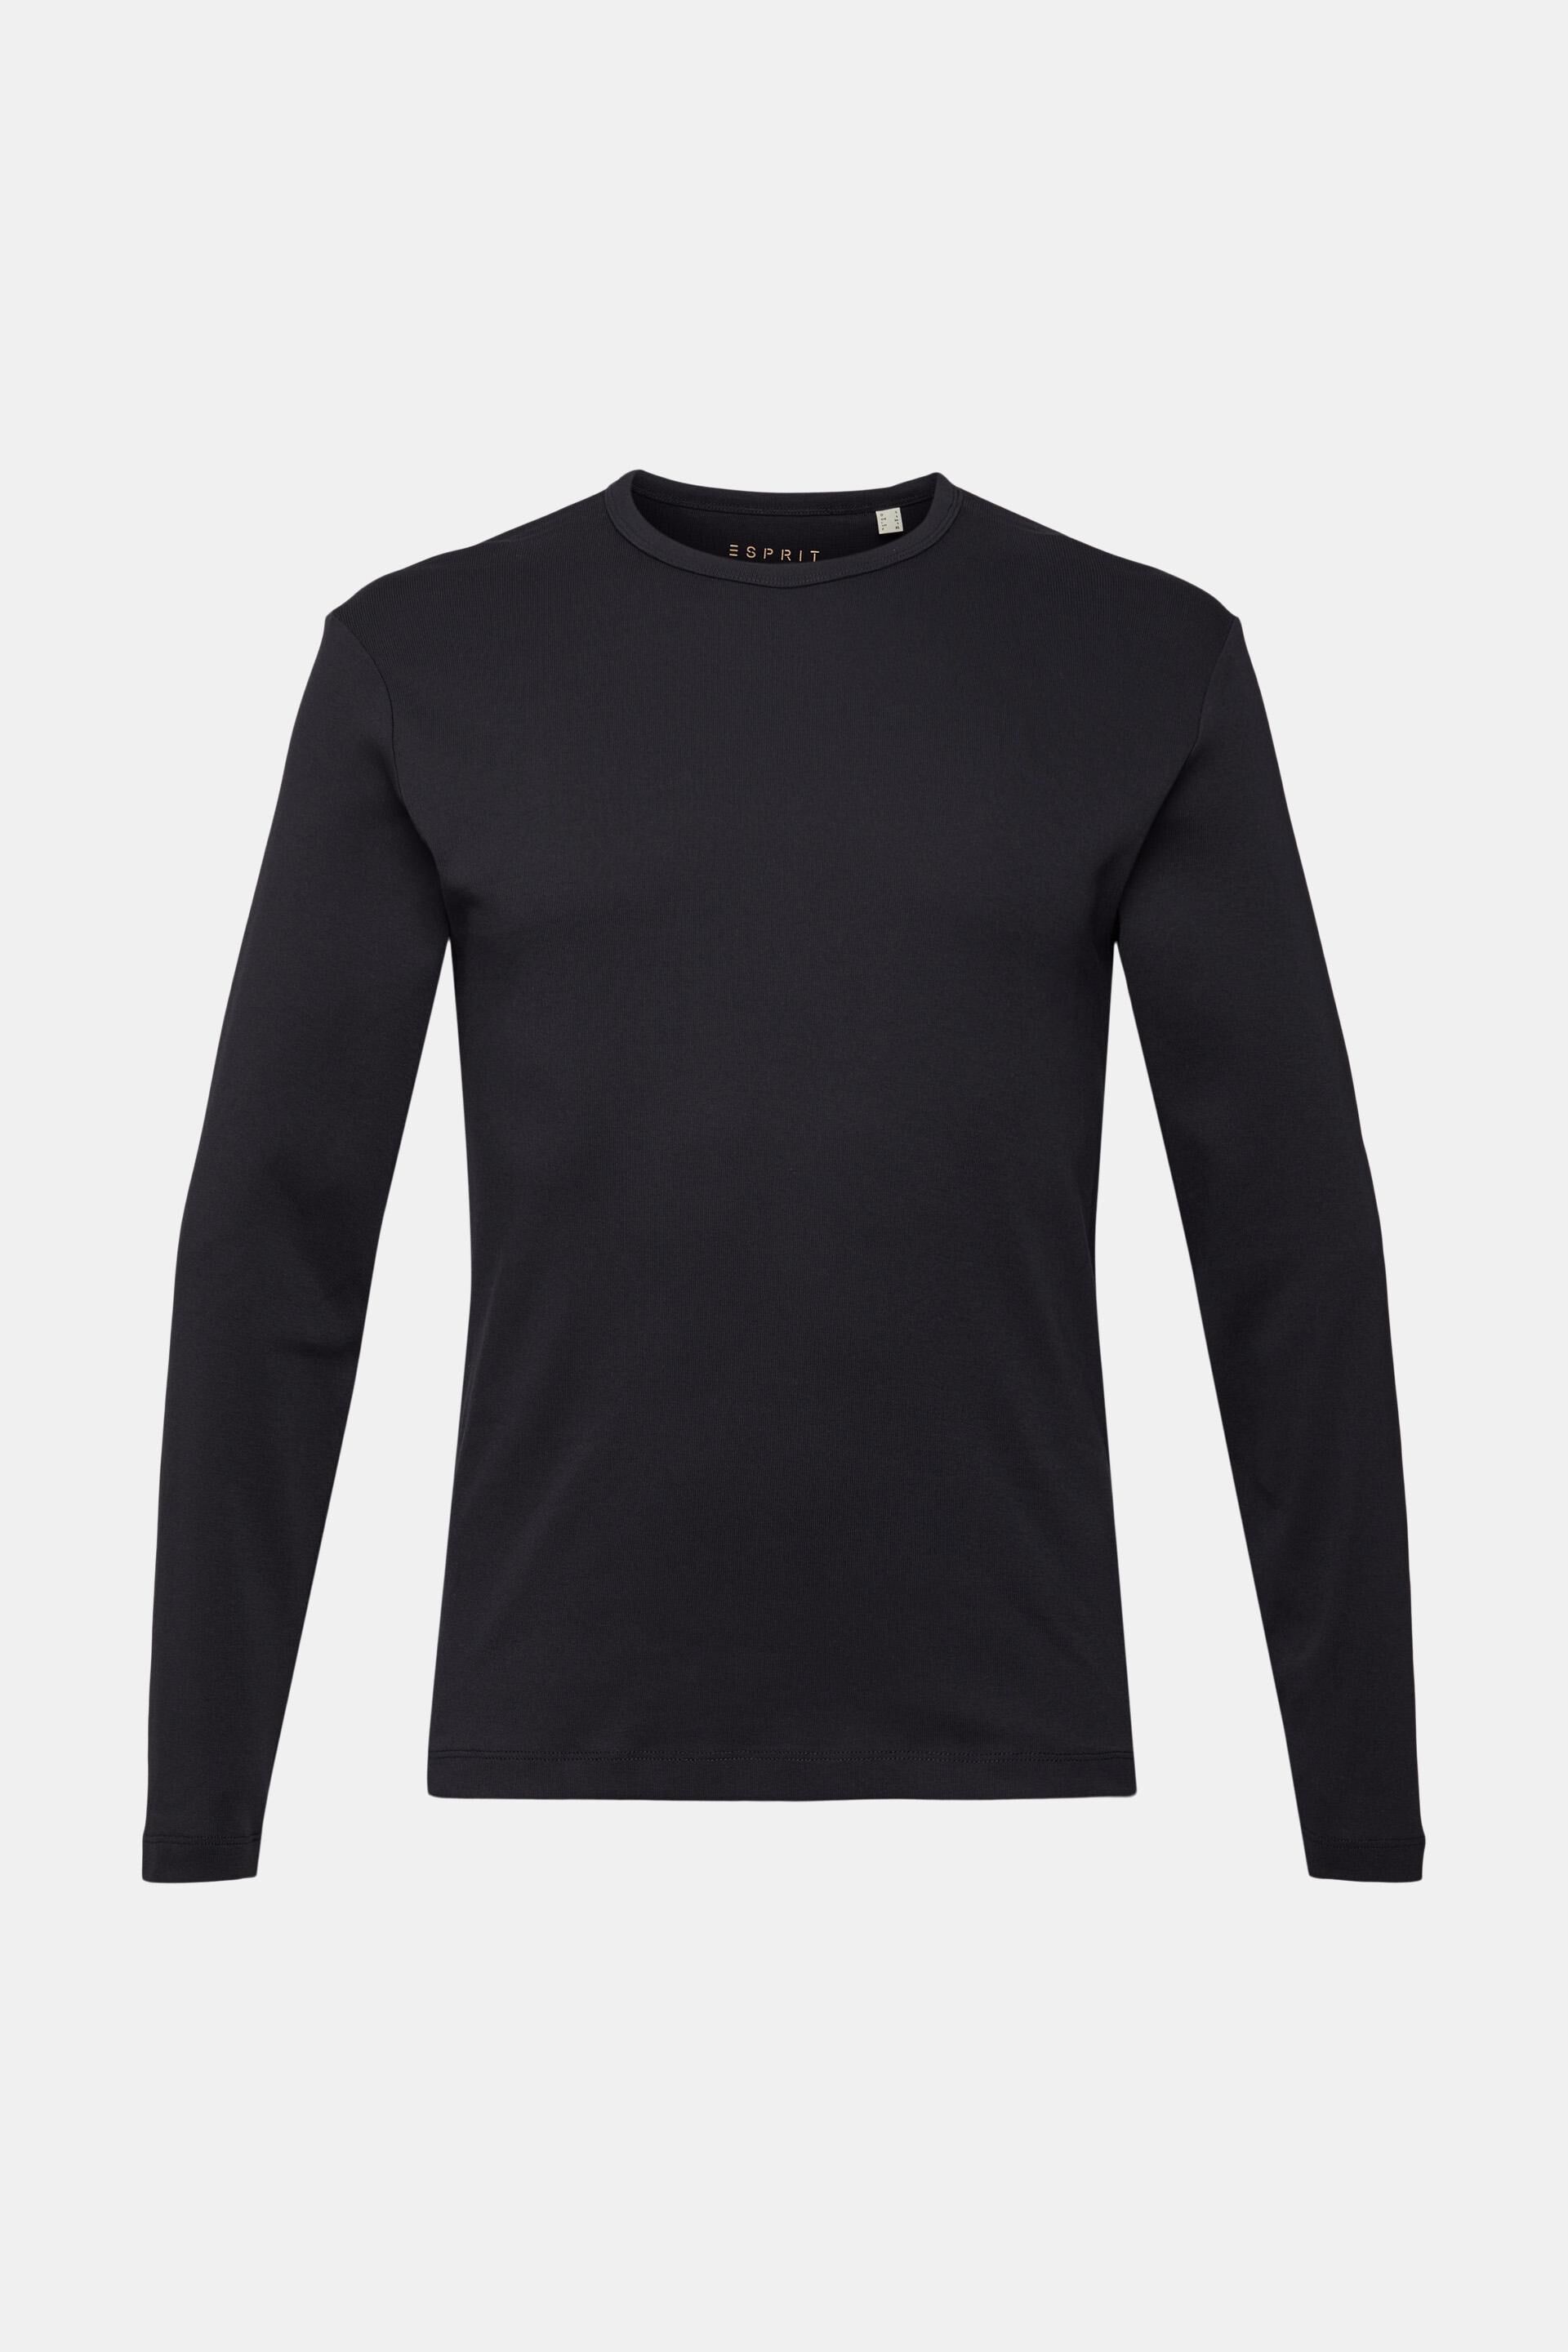 Mode Shirts V-hals shirts Esprit V-hals shirt zwart grafisch patroon casual uitstraling 